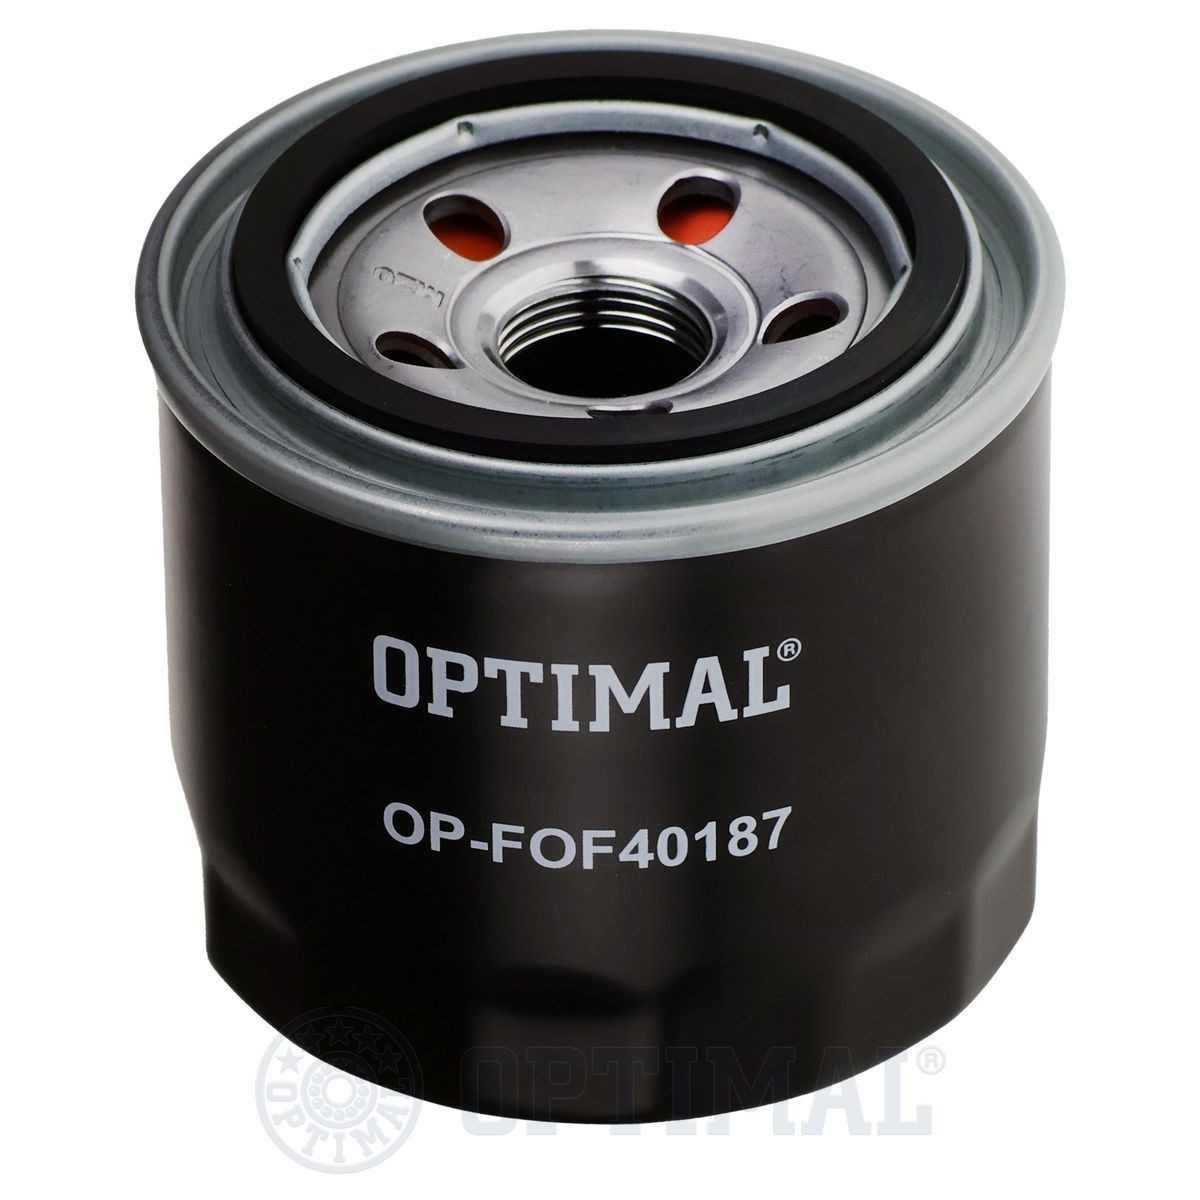 OPTIMAL OP-FOF40187 Oil filter 119530030